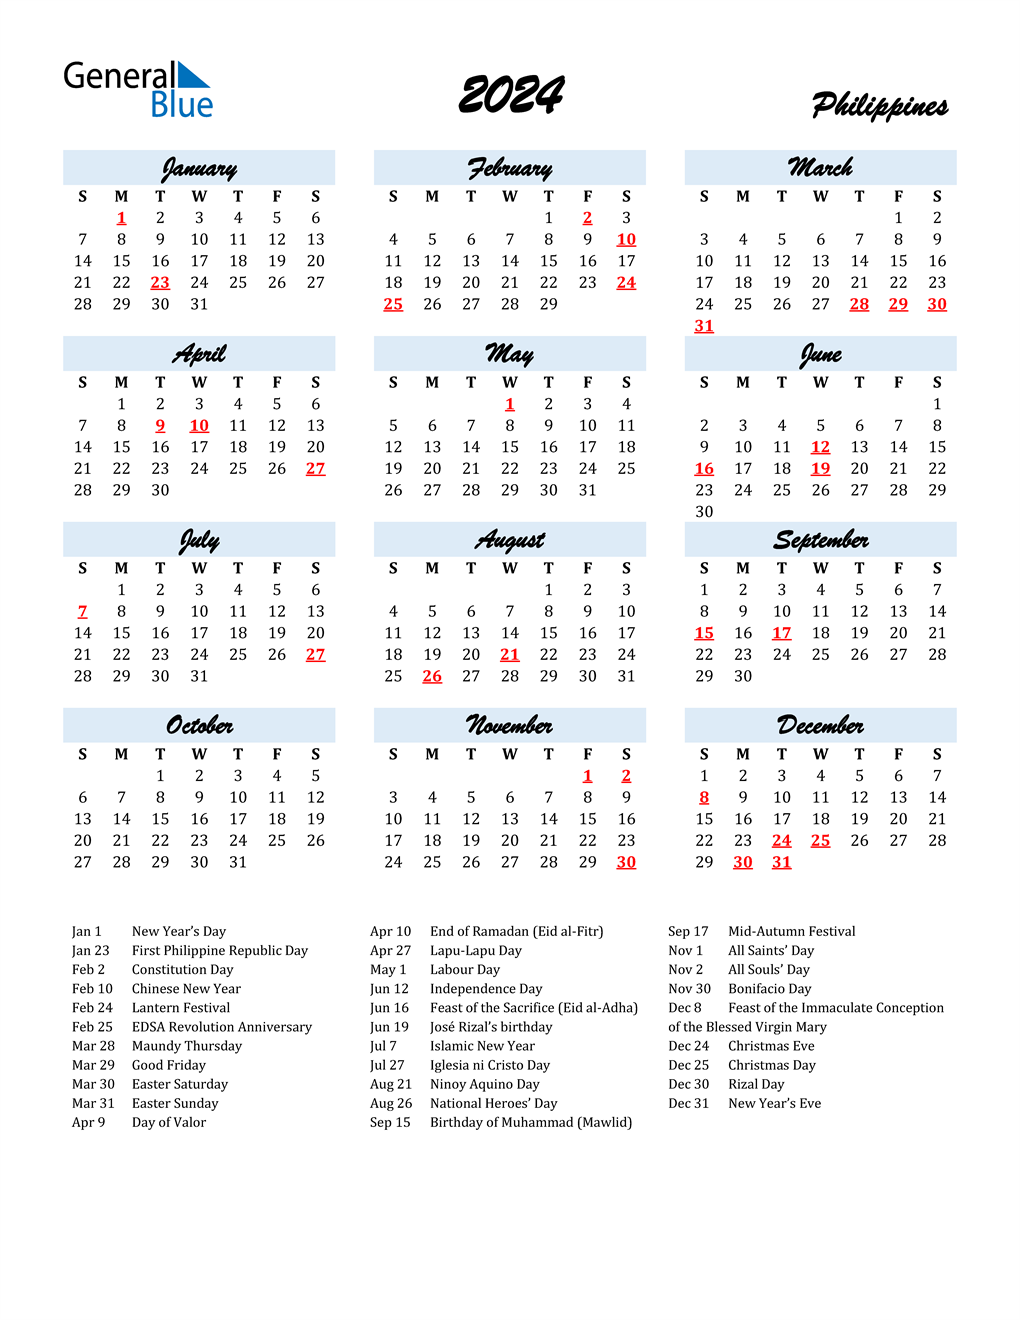 2024-philippines-calendar-with-holidays-2024-calendar-printable